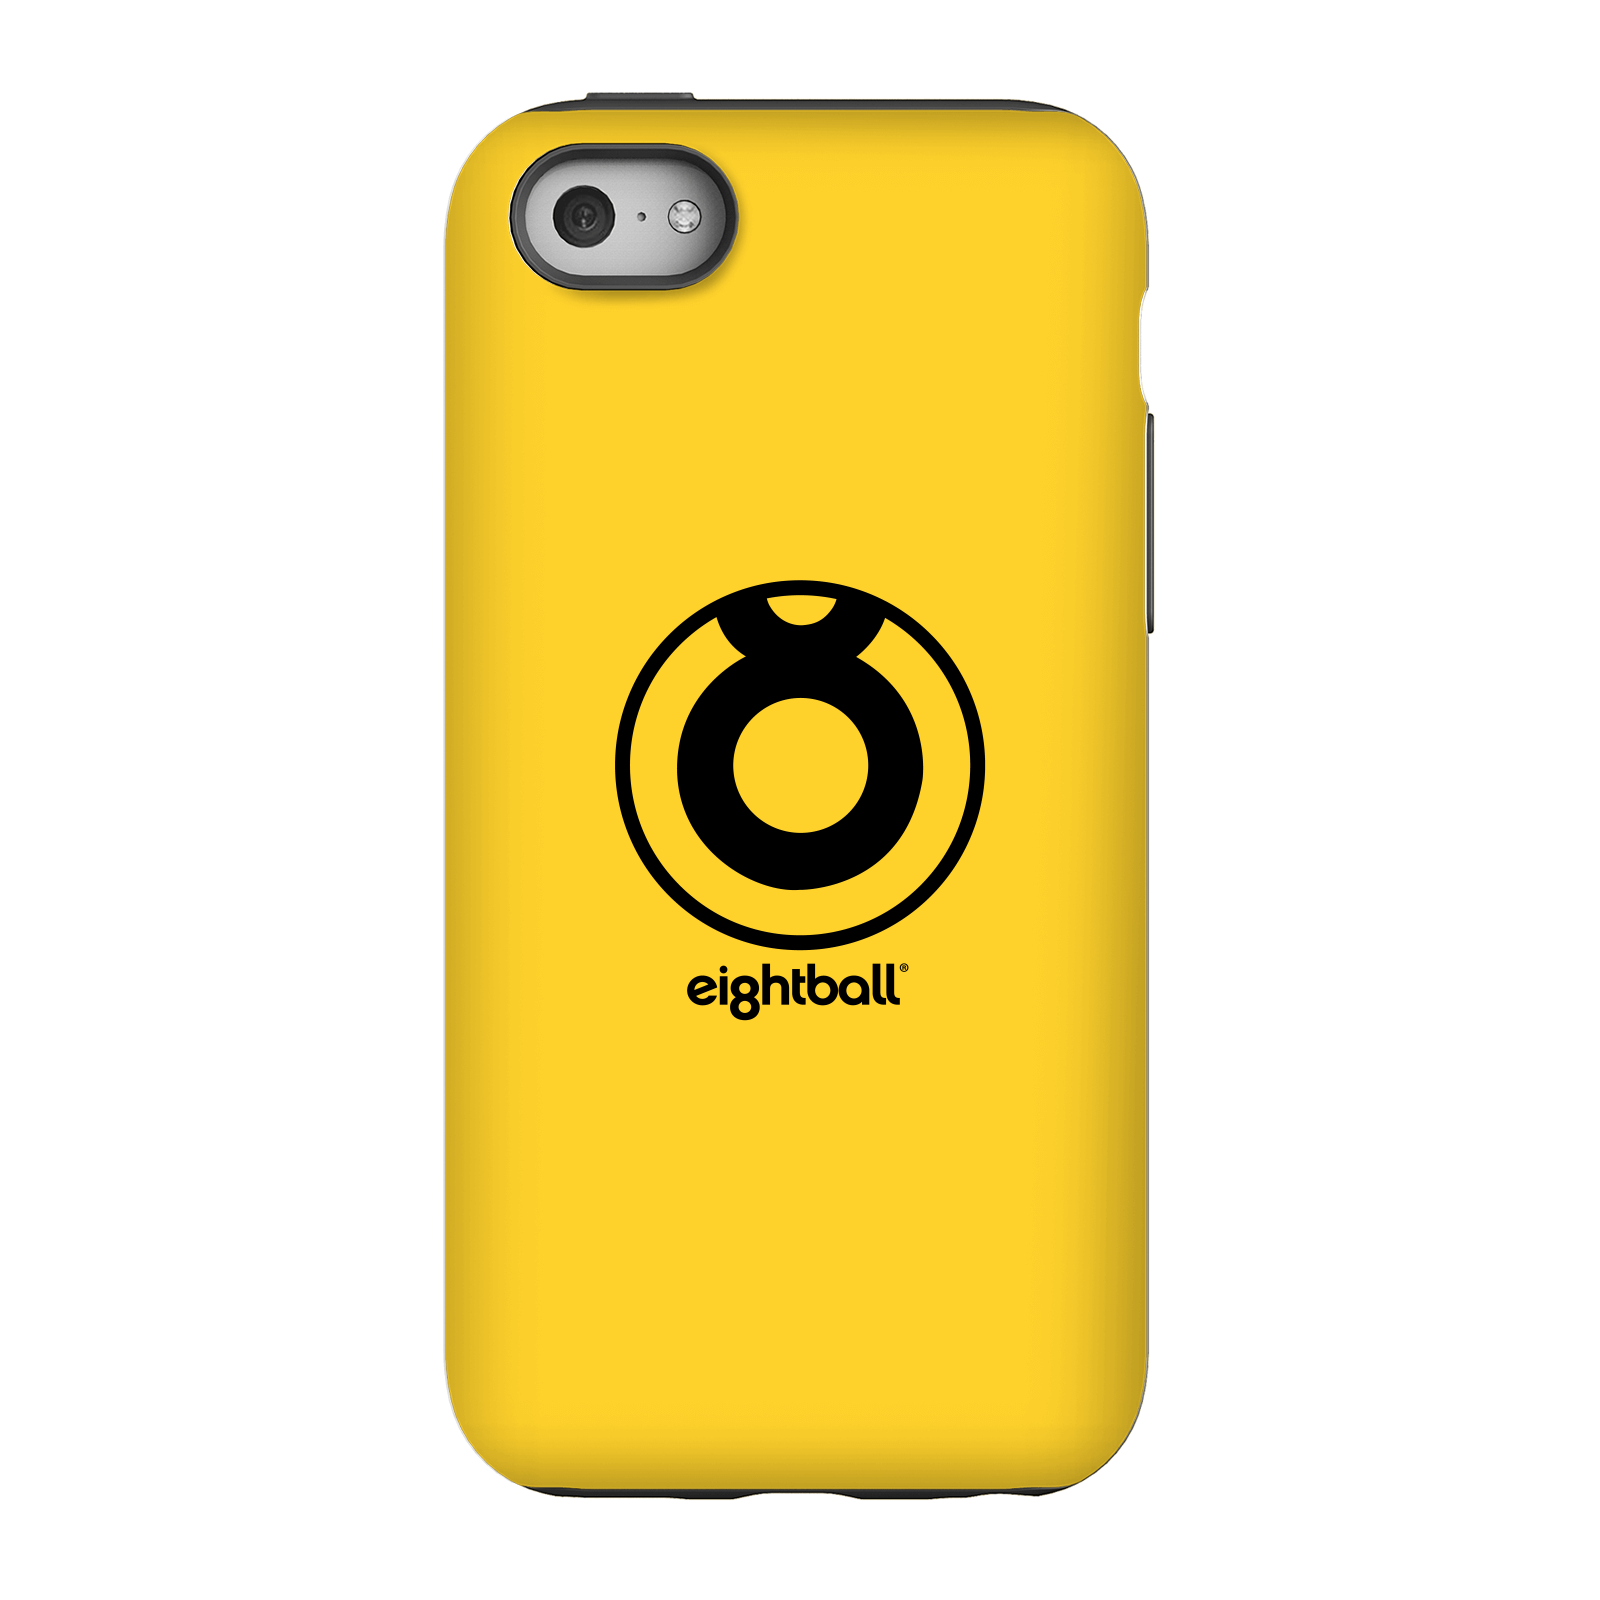 Funda Móvil Ei8htball Large Circle Logo para iPhone y Android - iPhone 5C - Carcasa doble capa - Brillante